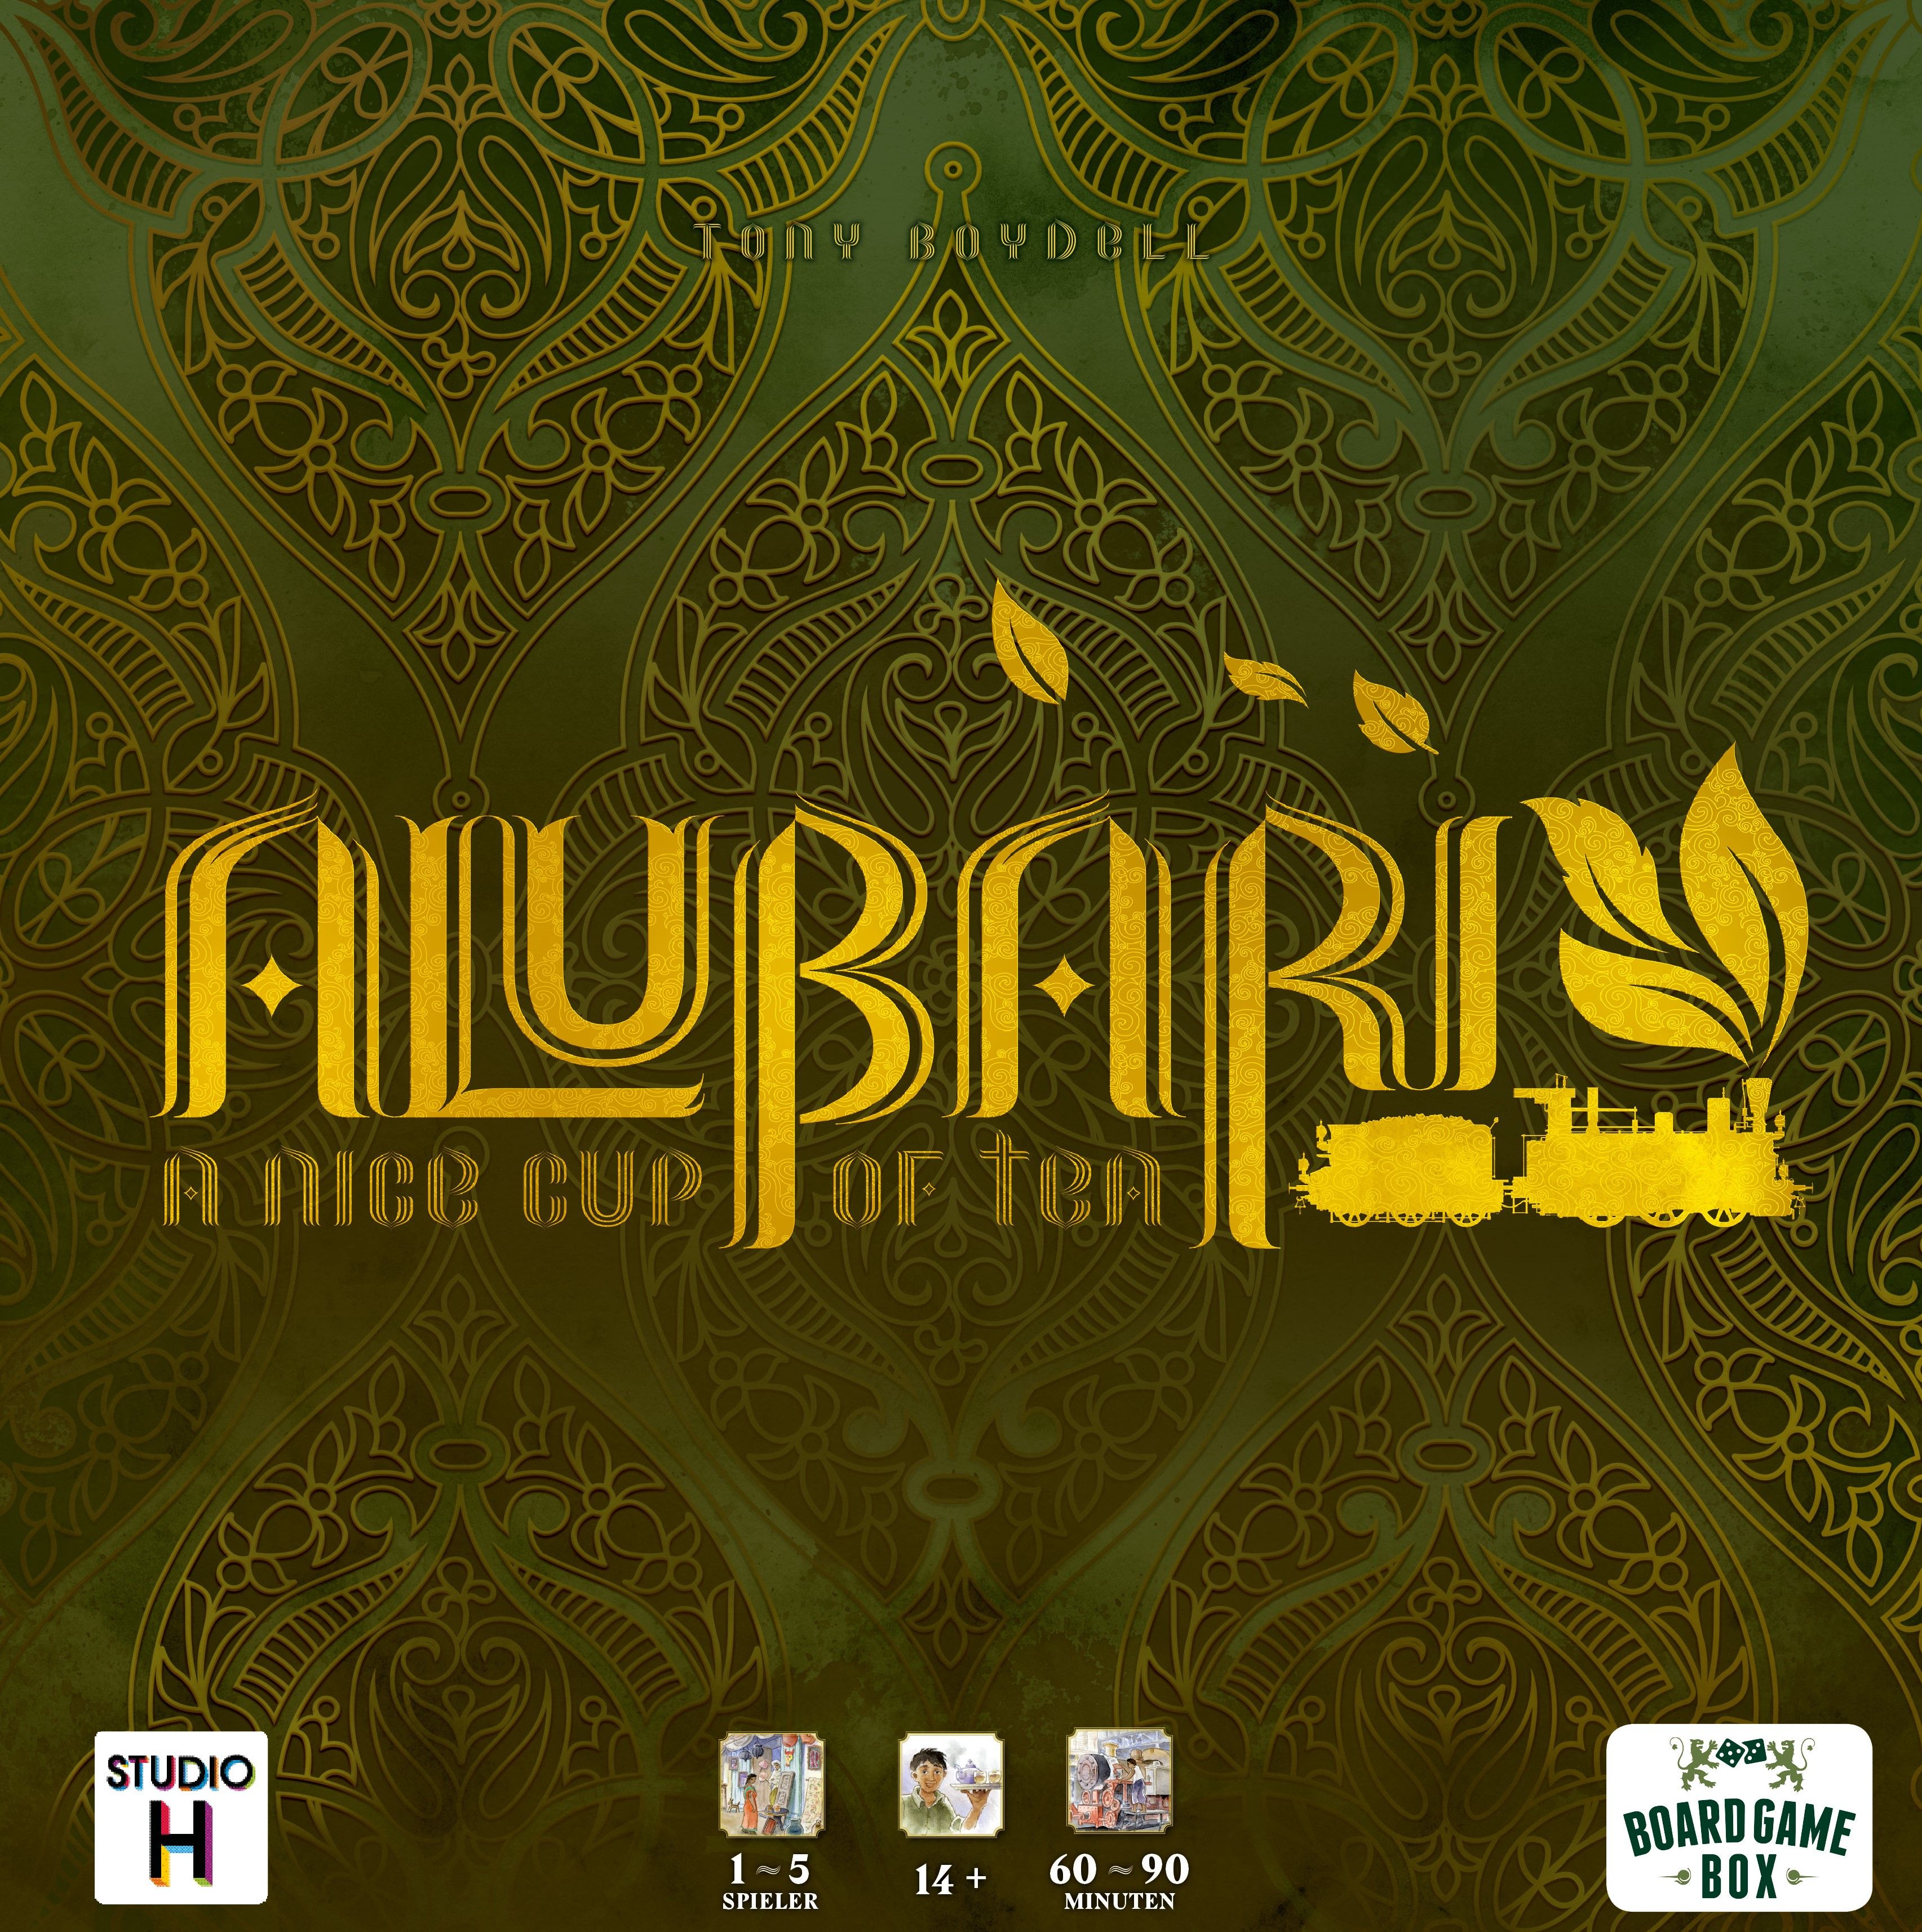 Alubari: A Nice Cup of Tea